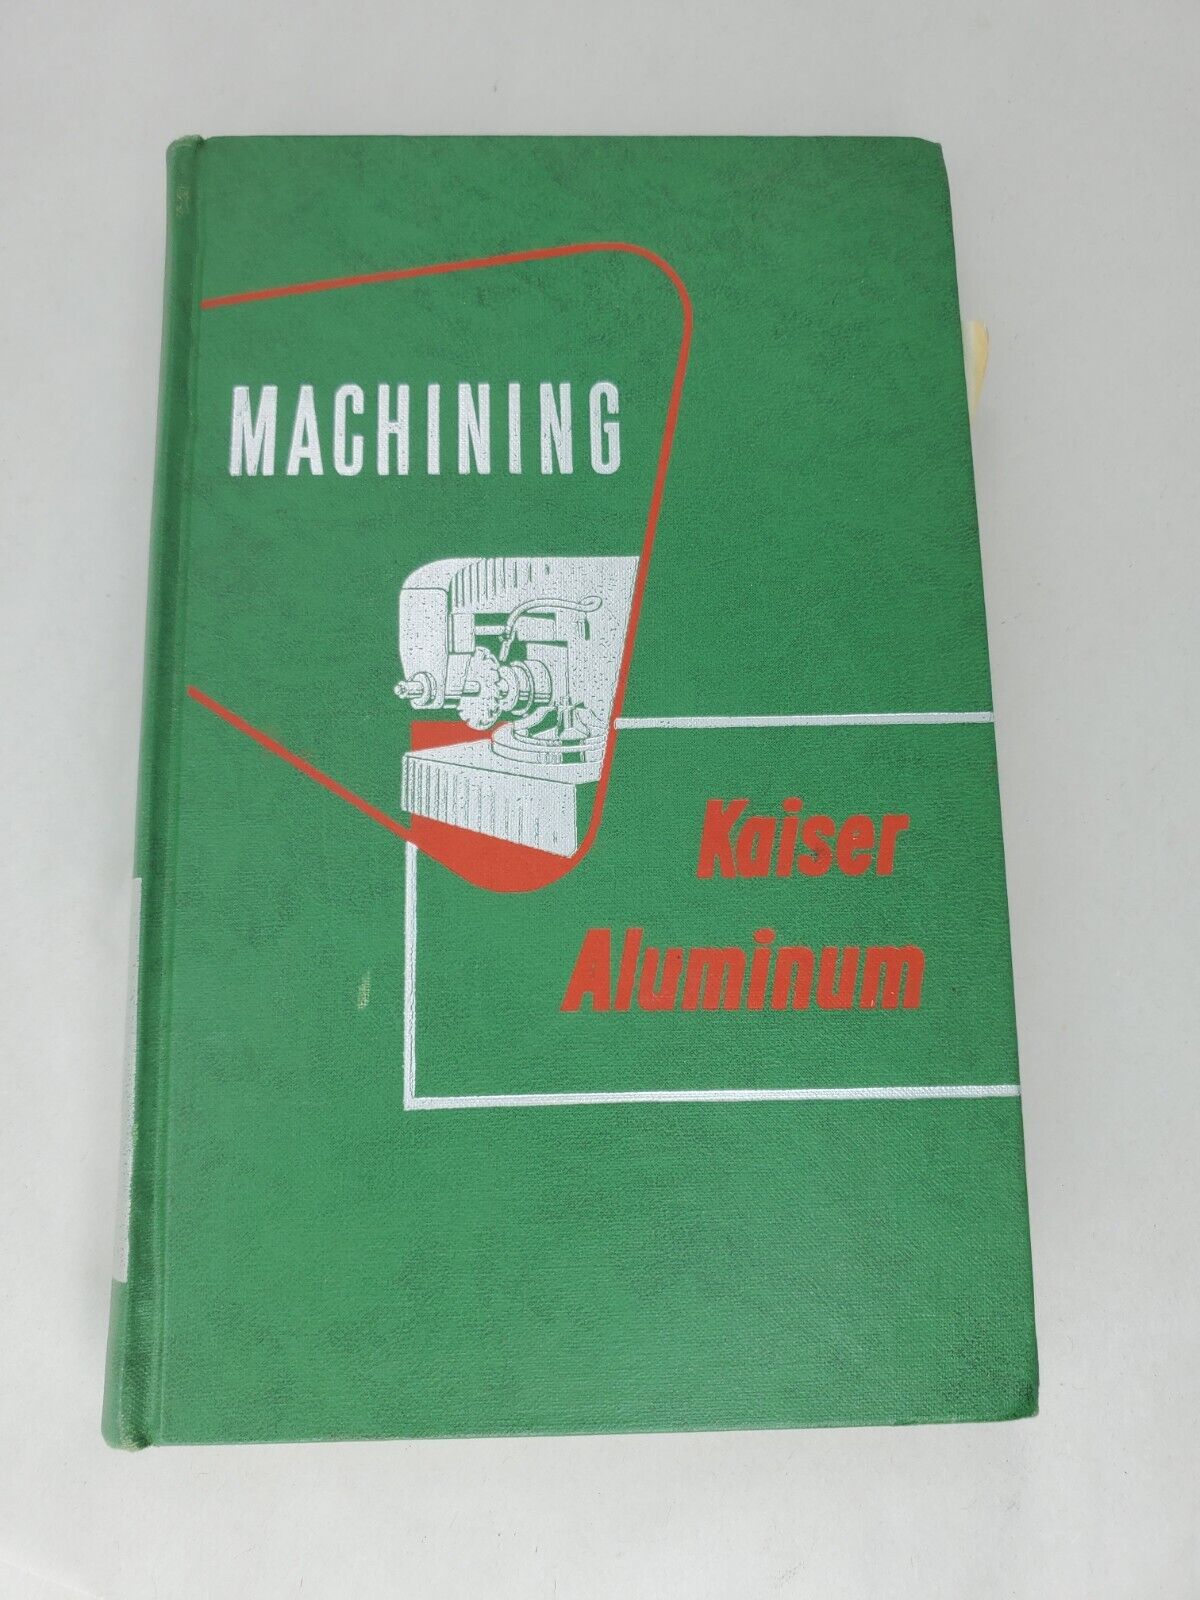 Vintage 1955 Machining Kaiser Aluminum Book